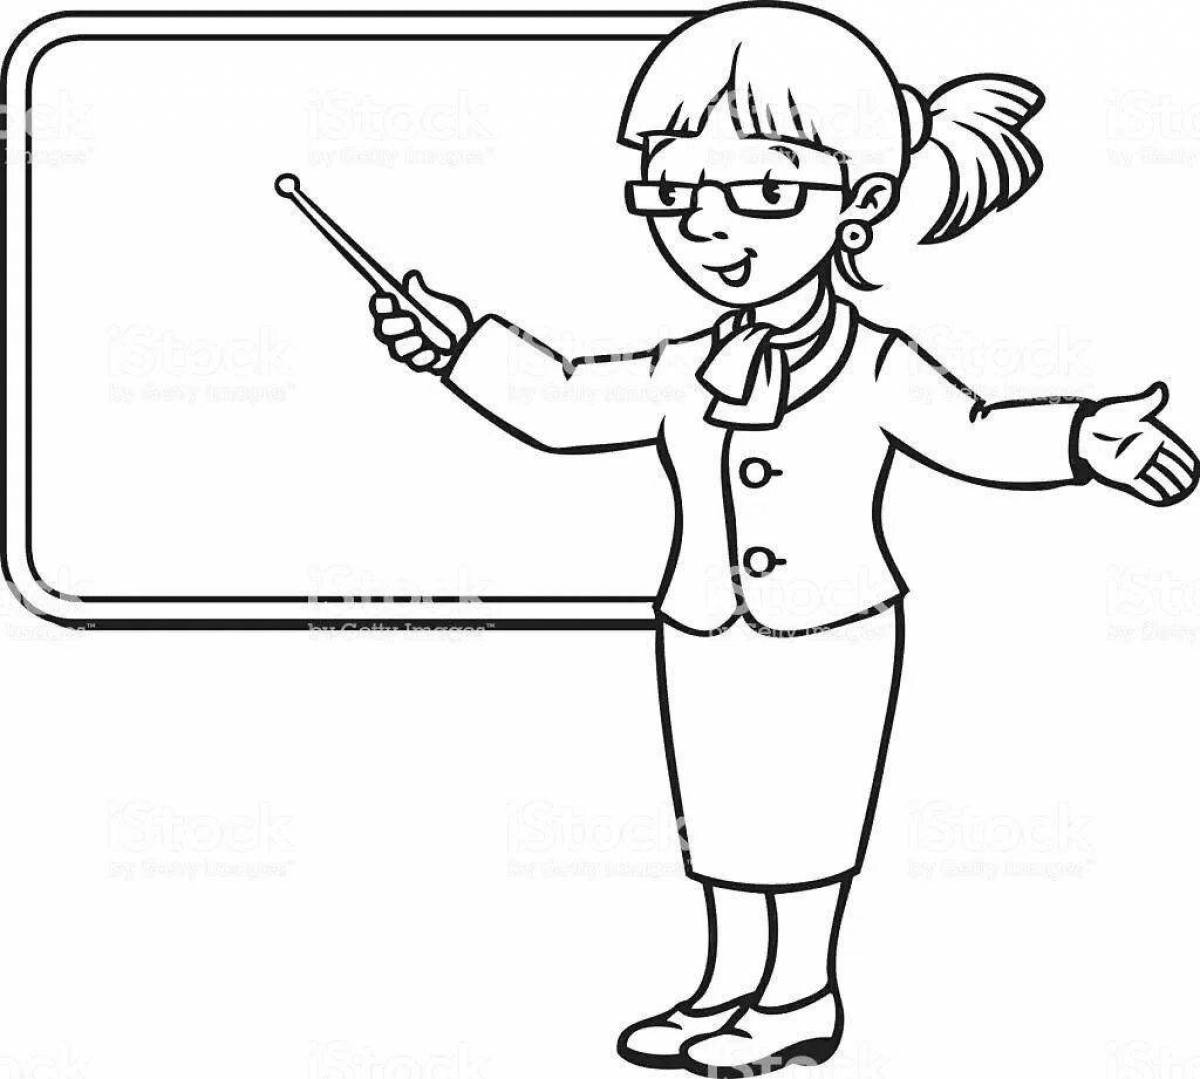 Teacher at blackboard with pointer #17